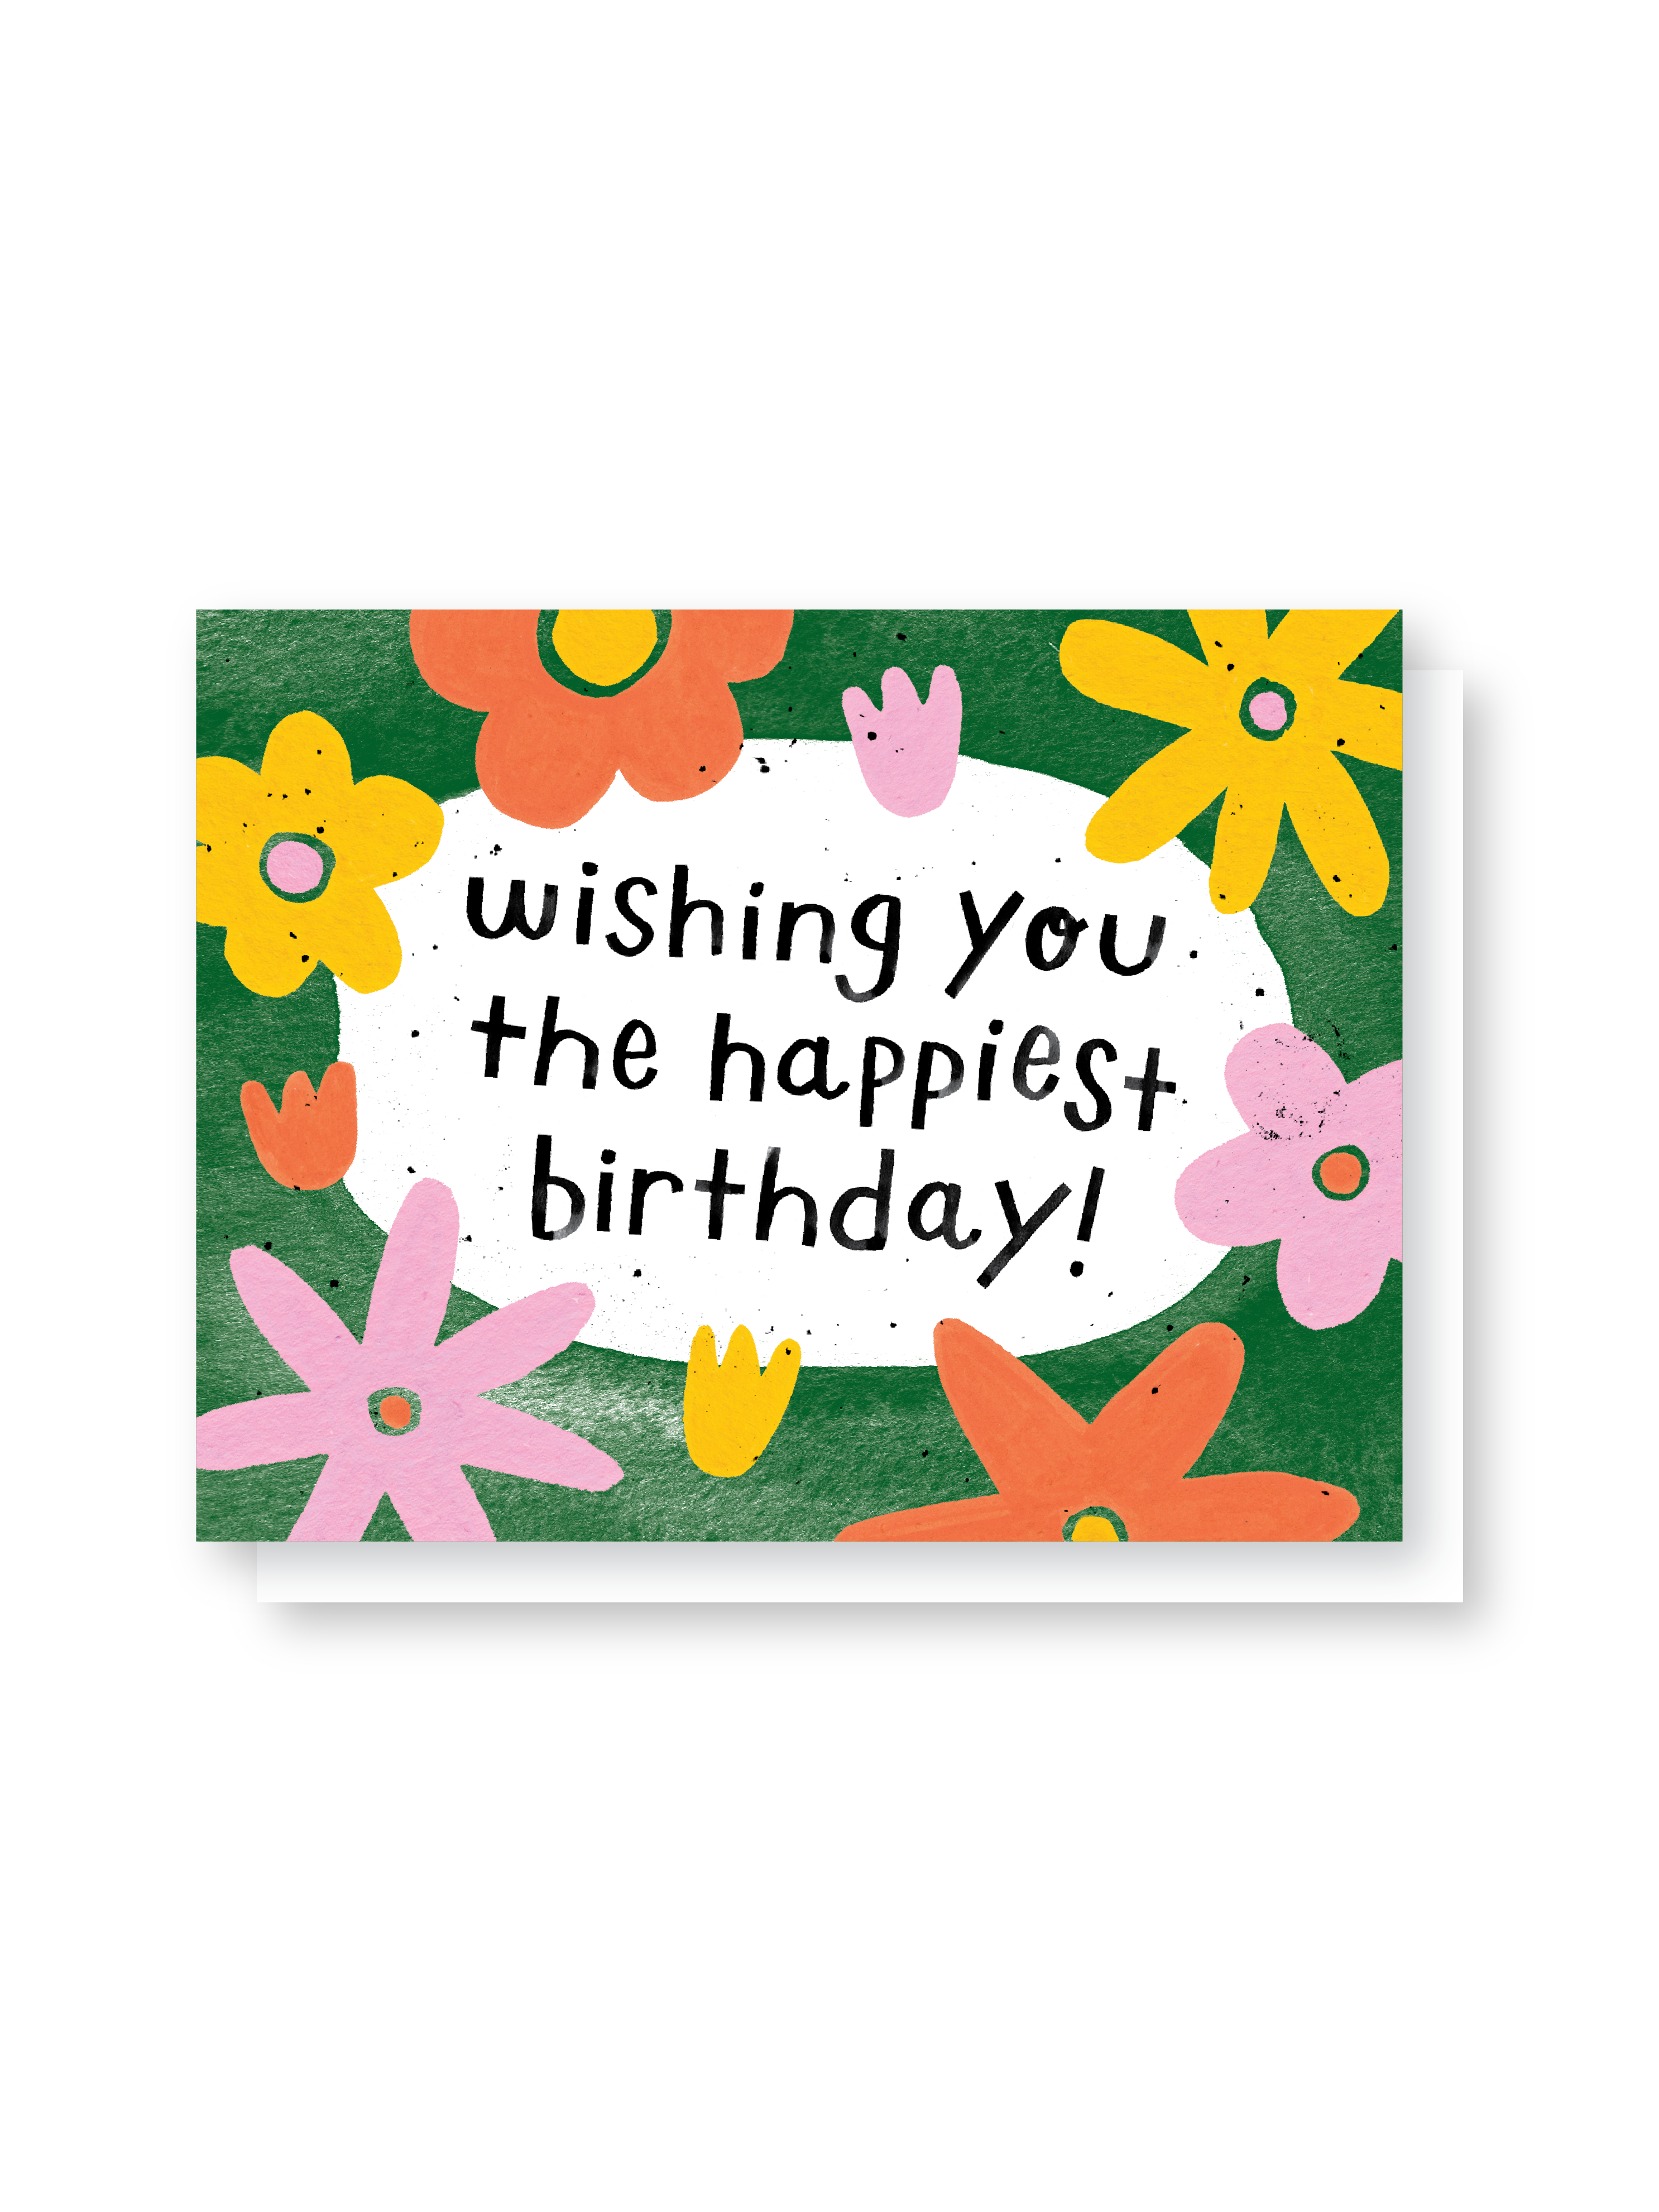 Birthday card - Happy birthday to you